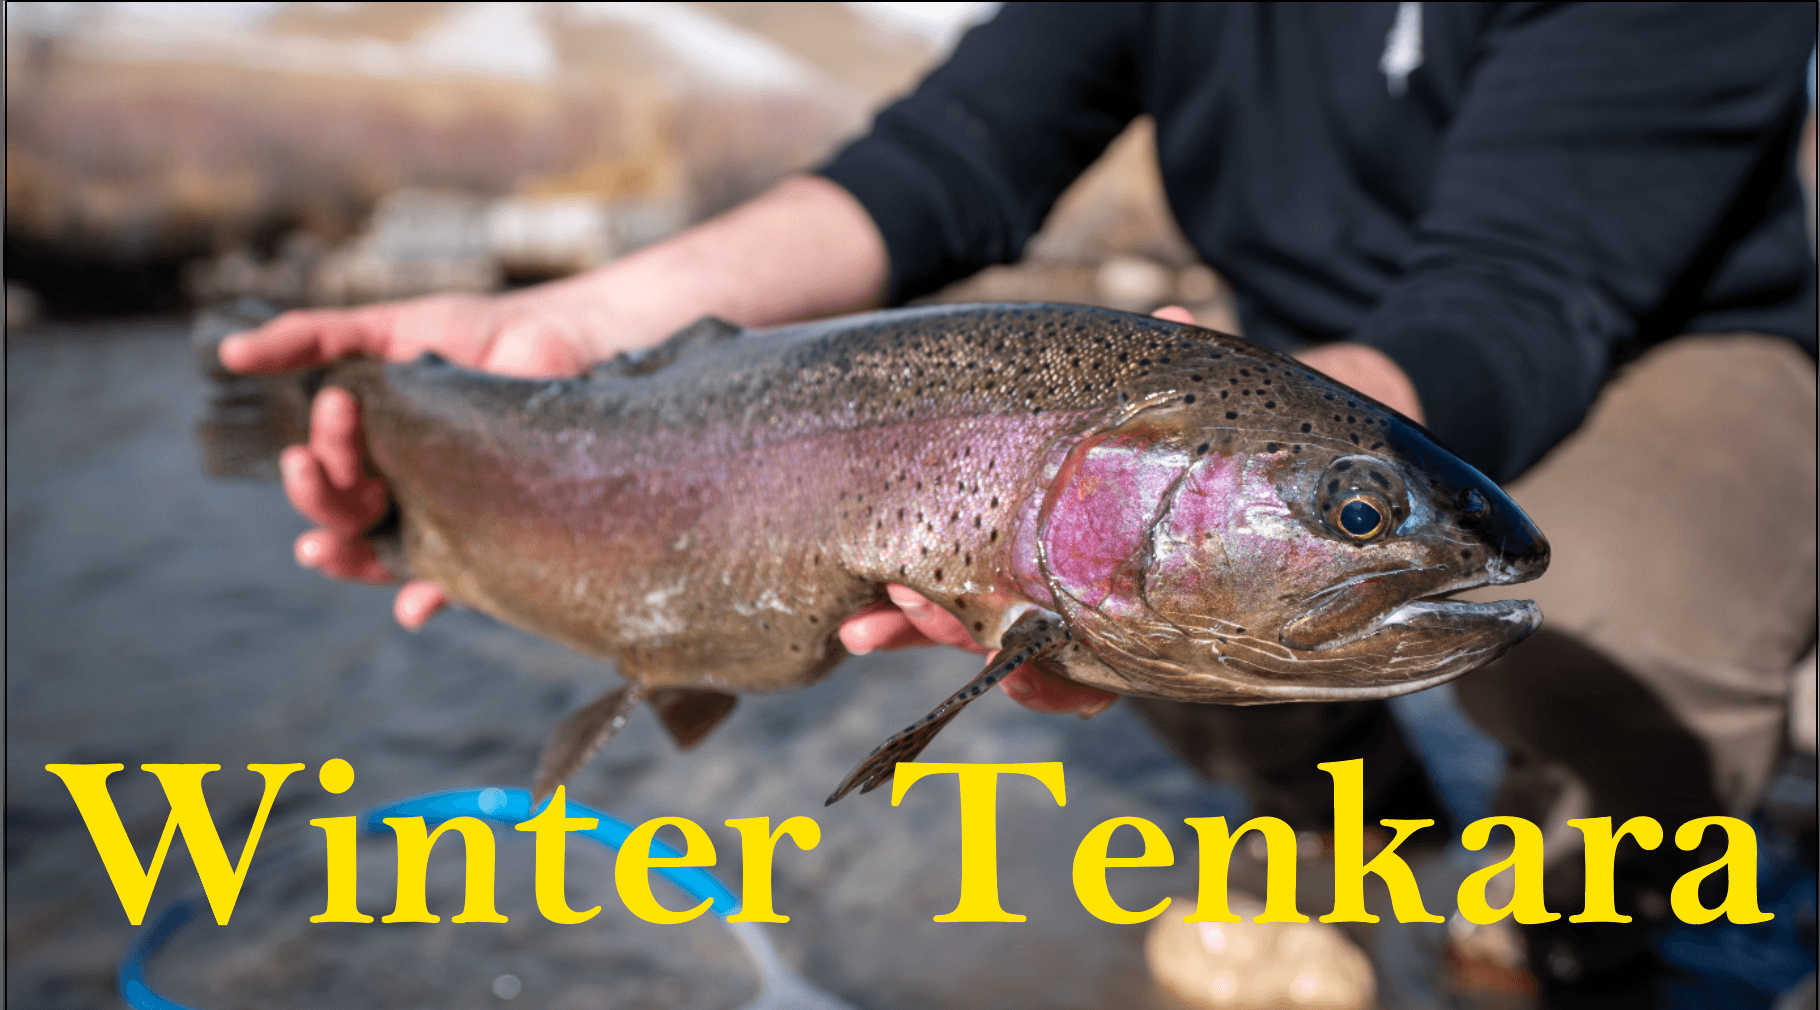 Winter Tenkara Fishing - Tenkara Rod Co.